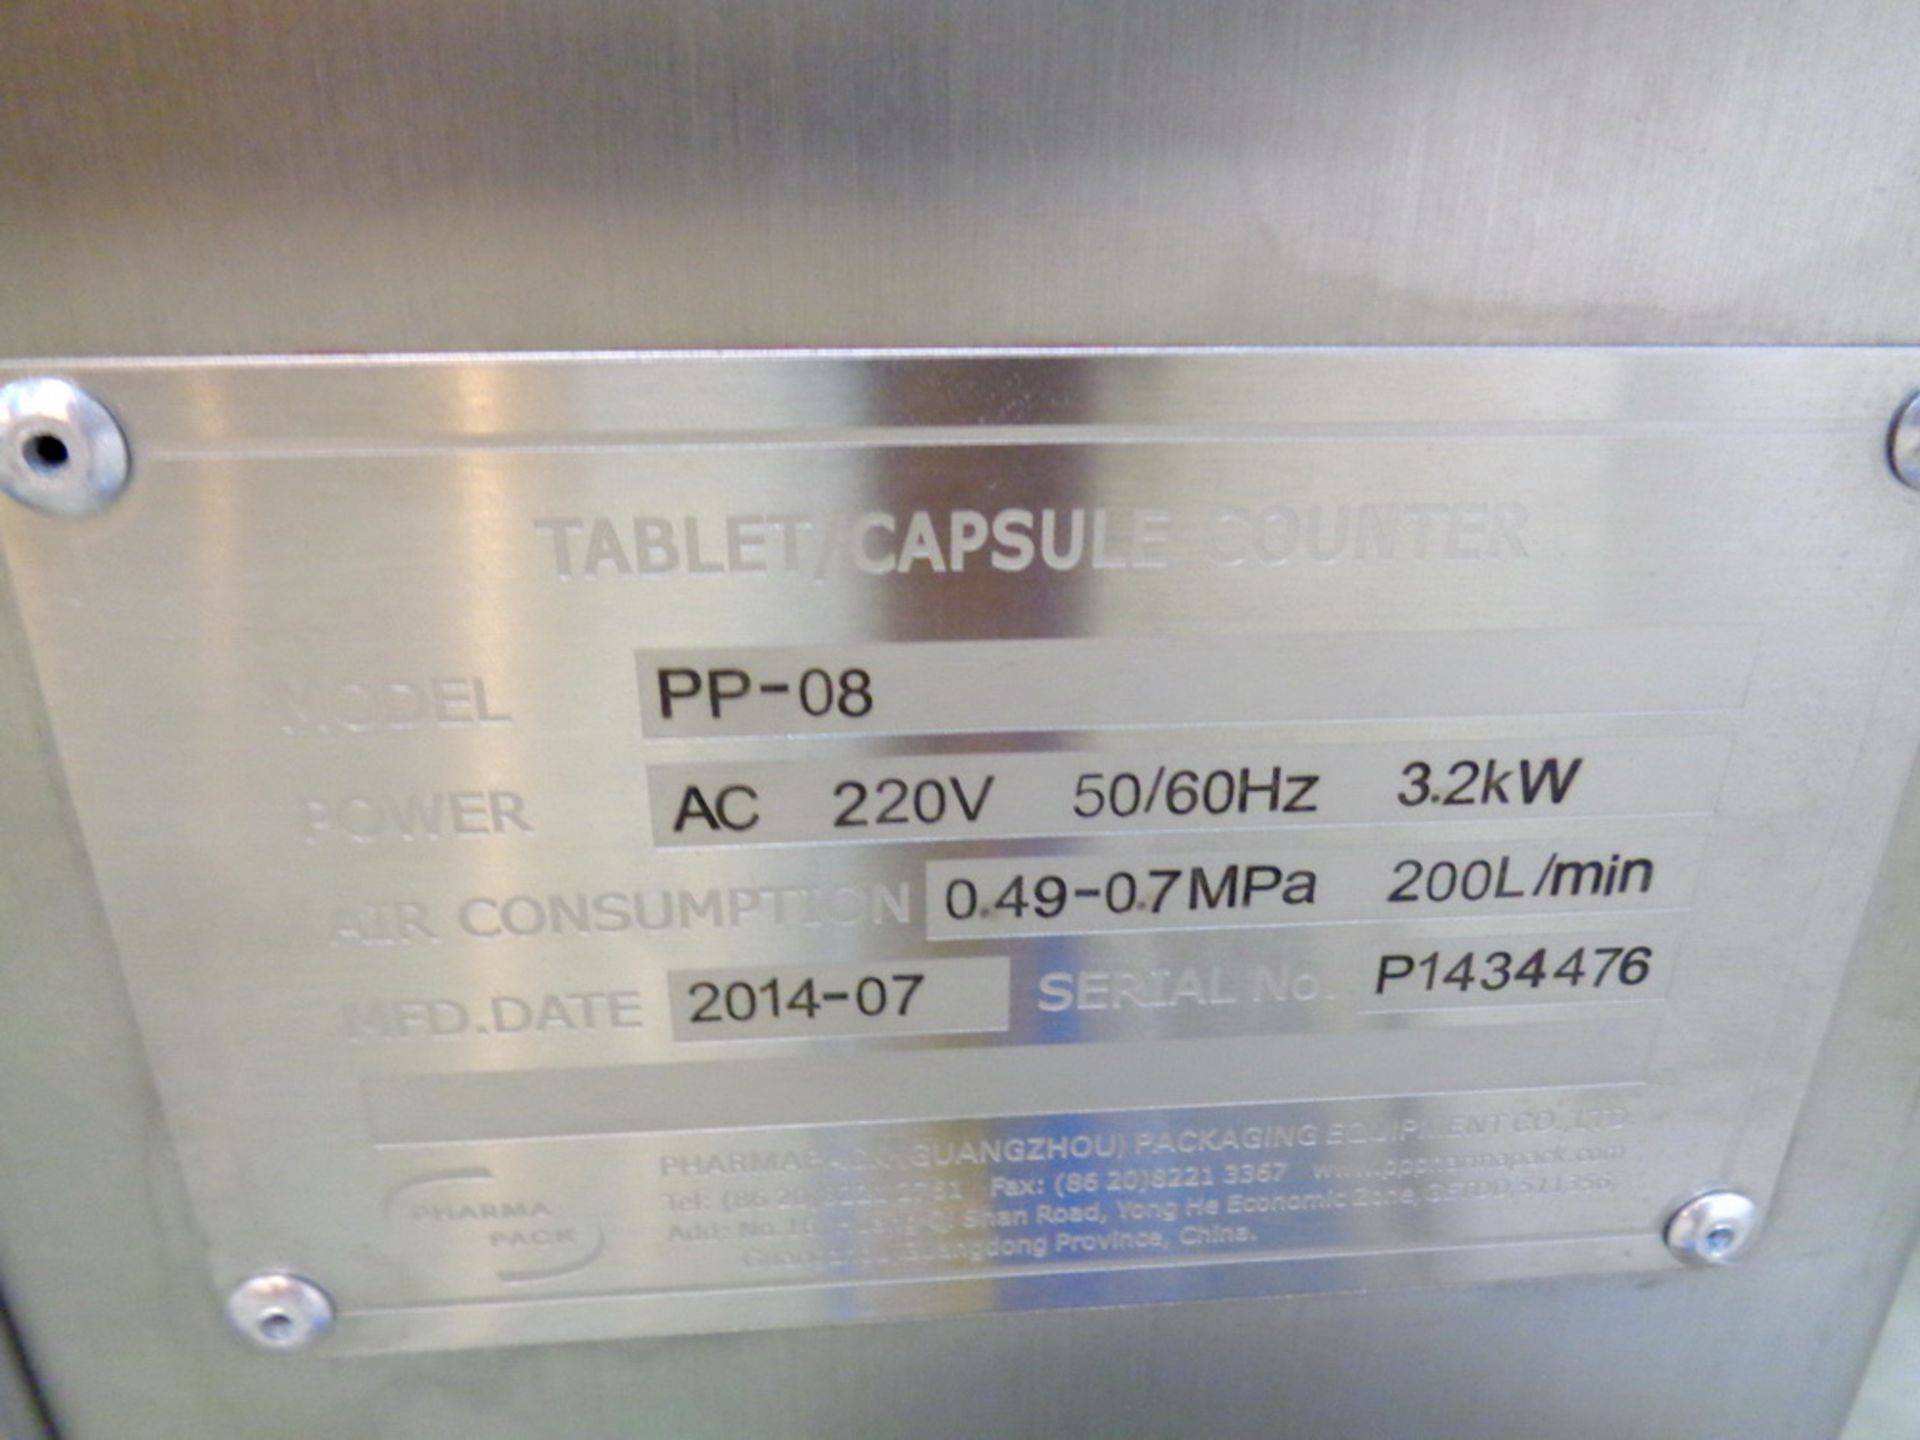 PharmaPack 16 Lane Tablet/Capsule Channel Counter, Model PP-08, S/N P1434476 - Image 13 of 14